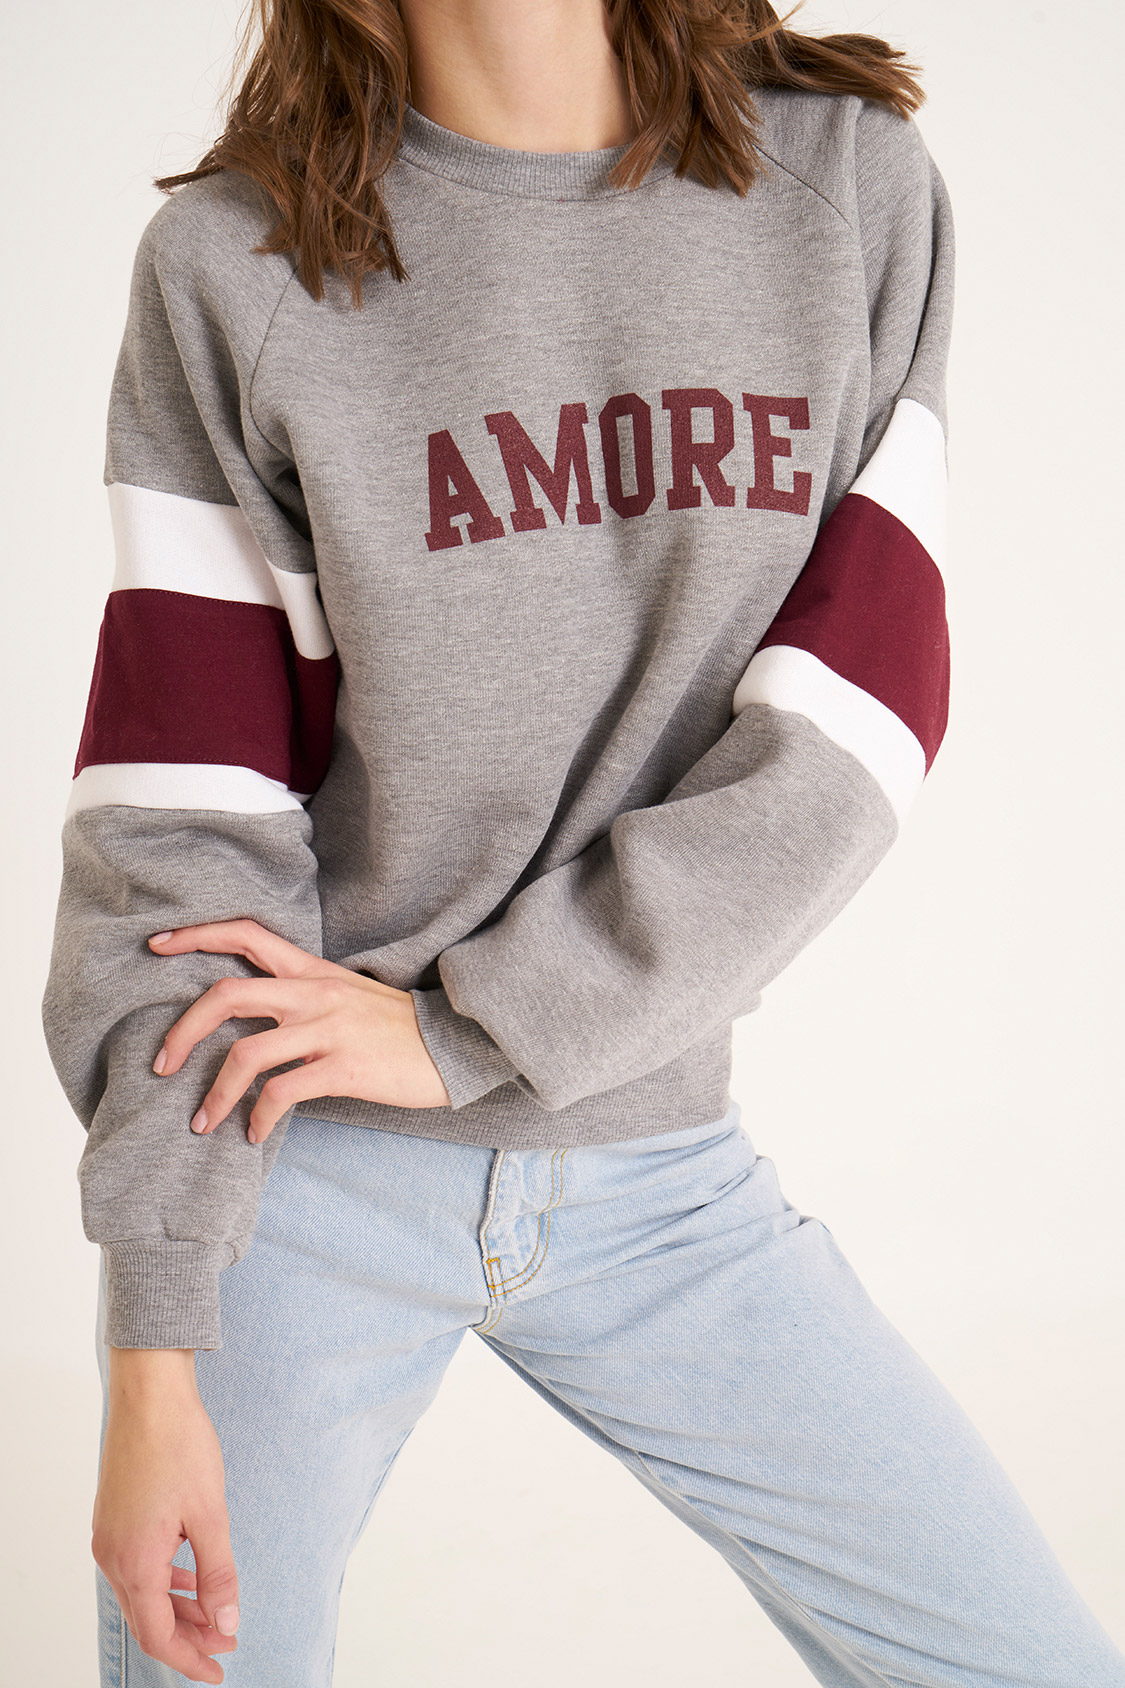 Amore printed sweatshirt